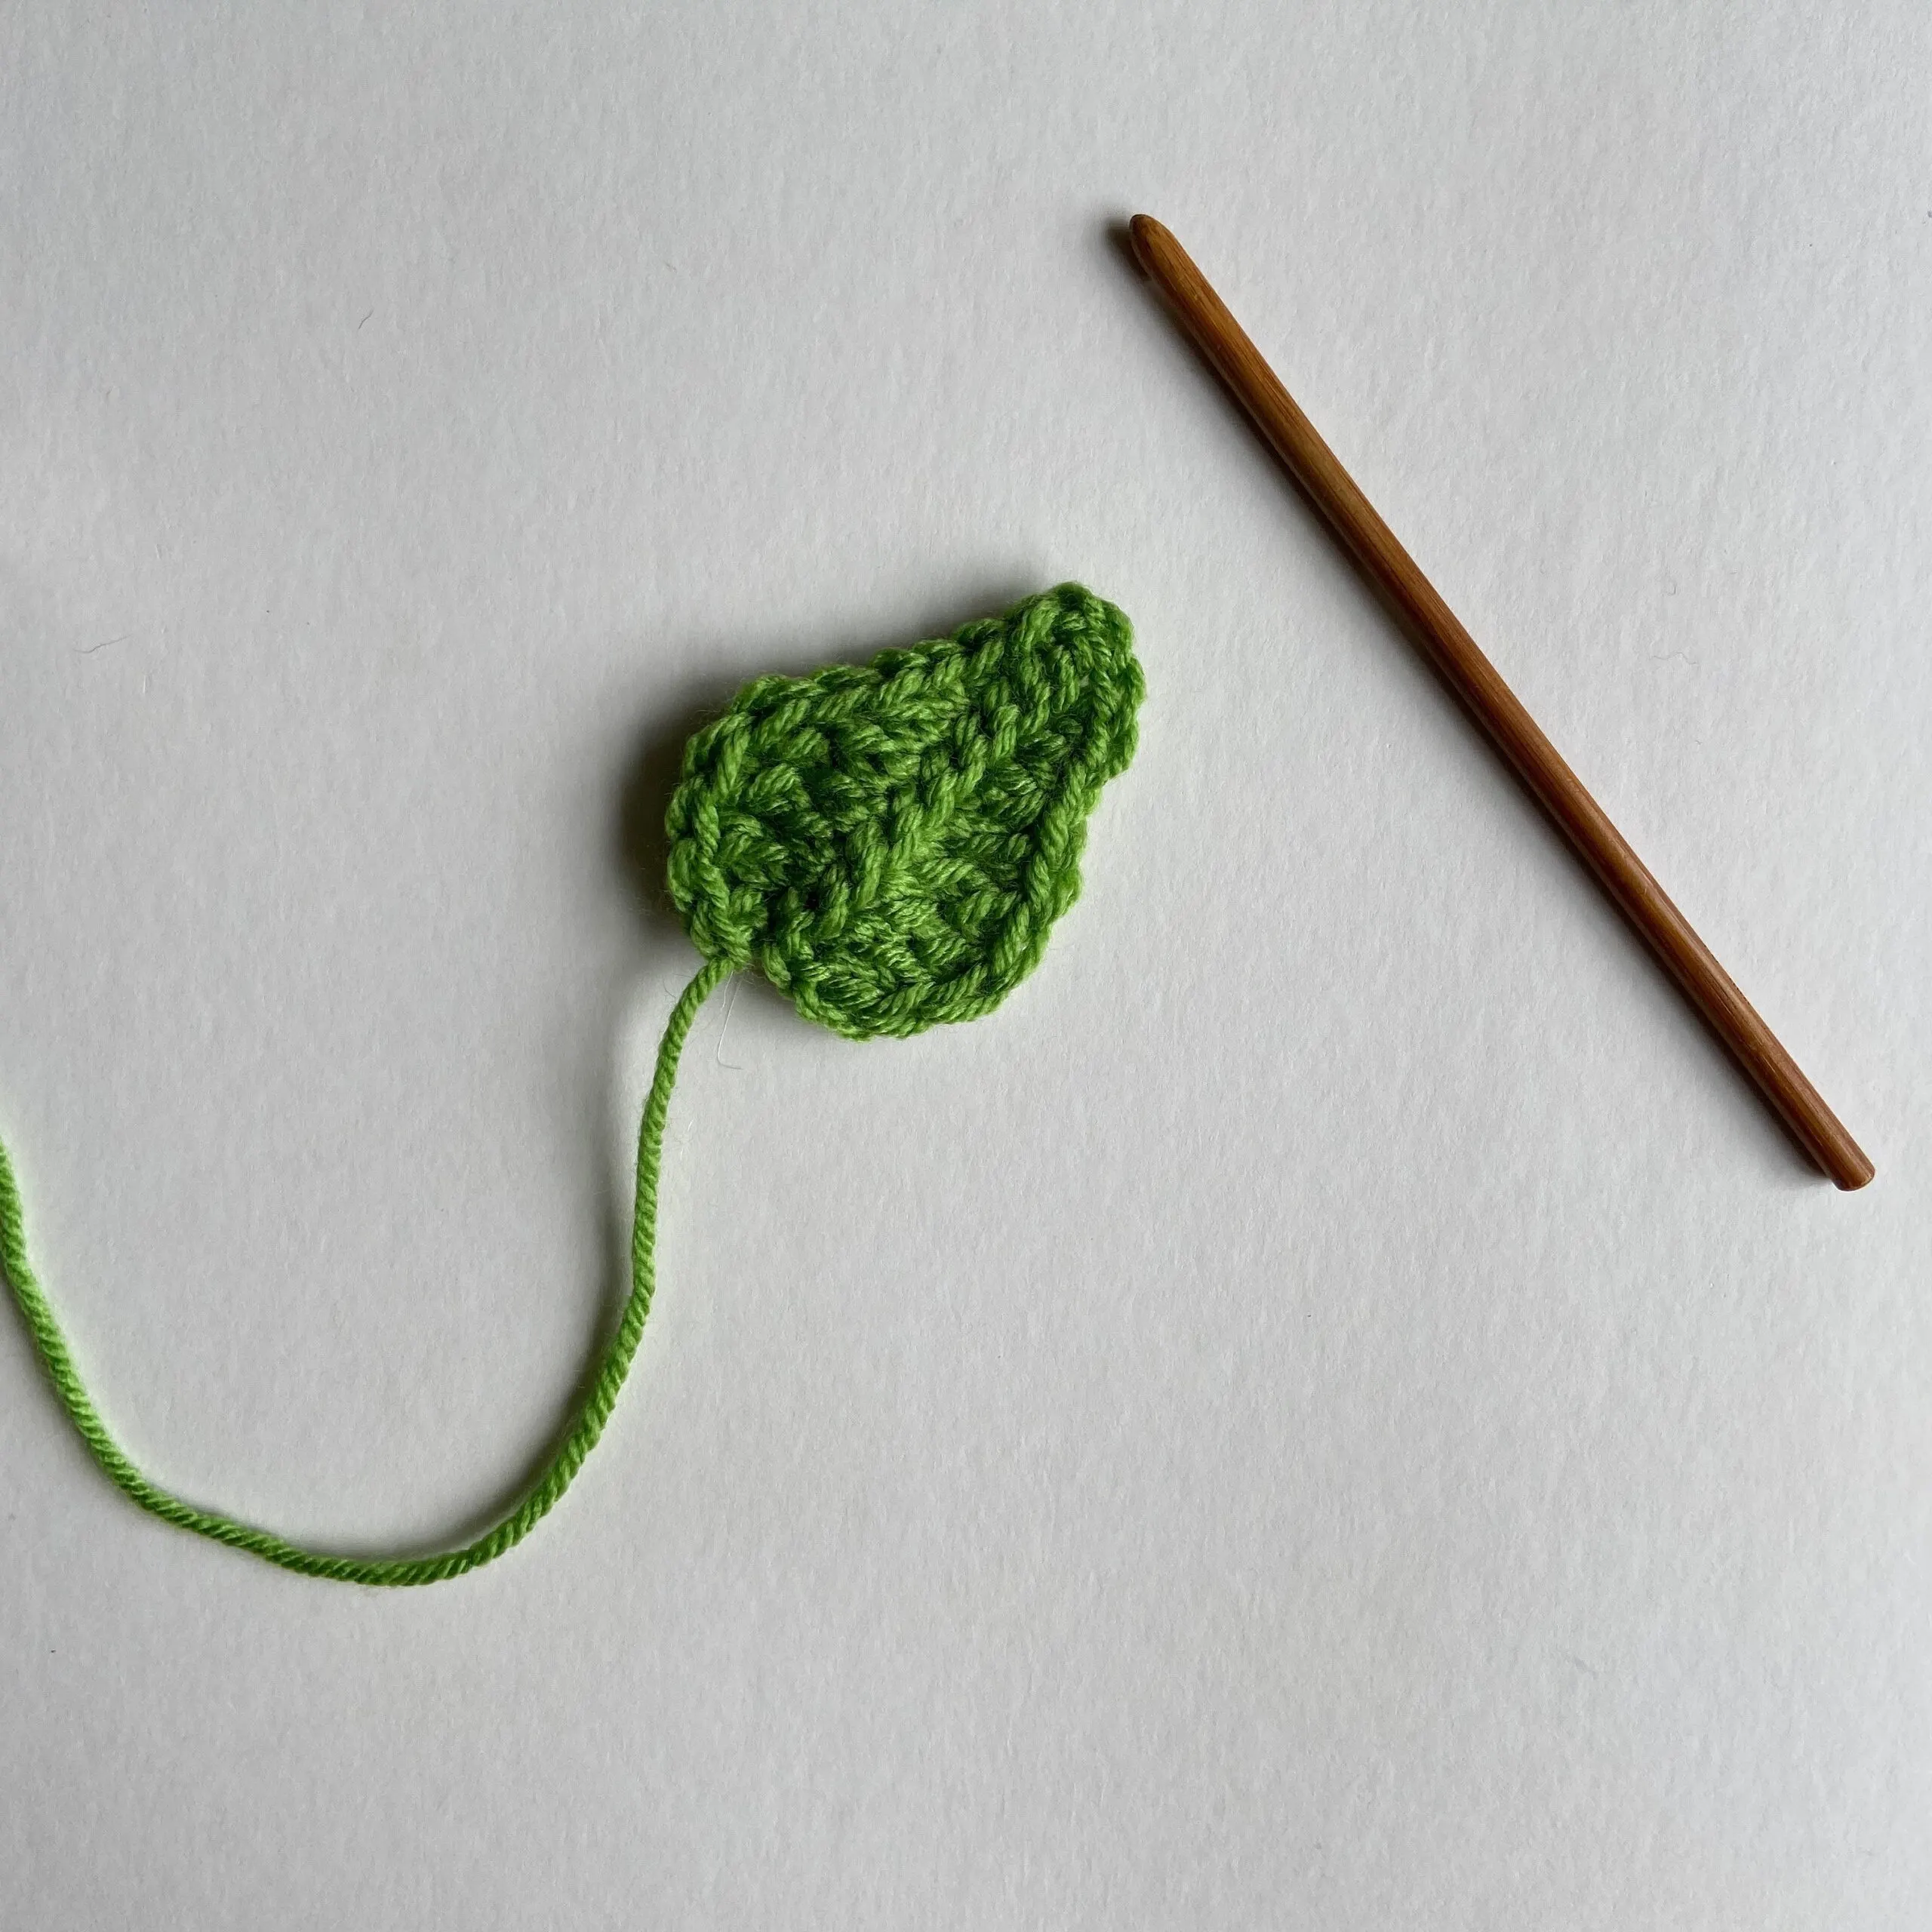 small green crochet leaf and wooden crochet hook